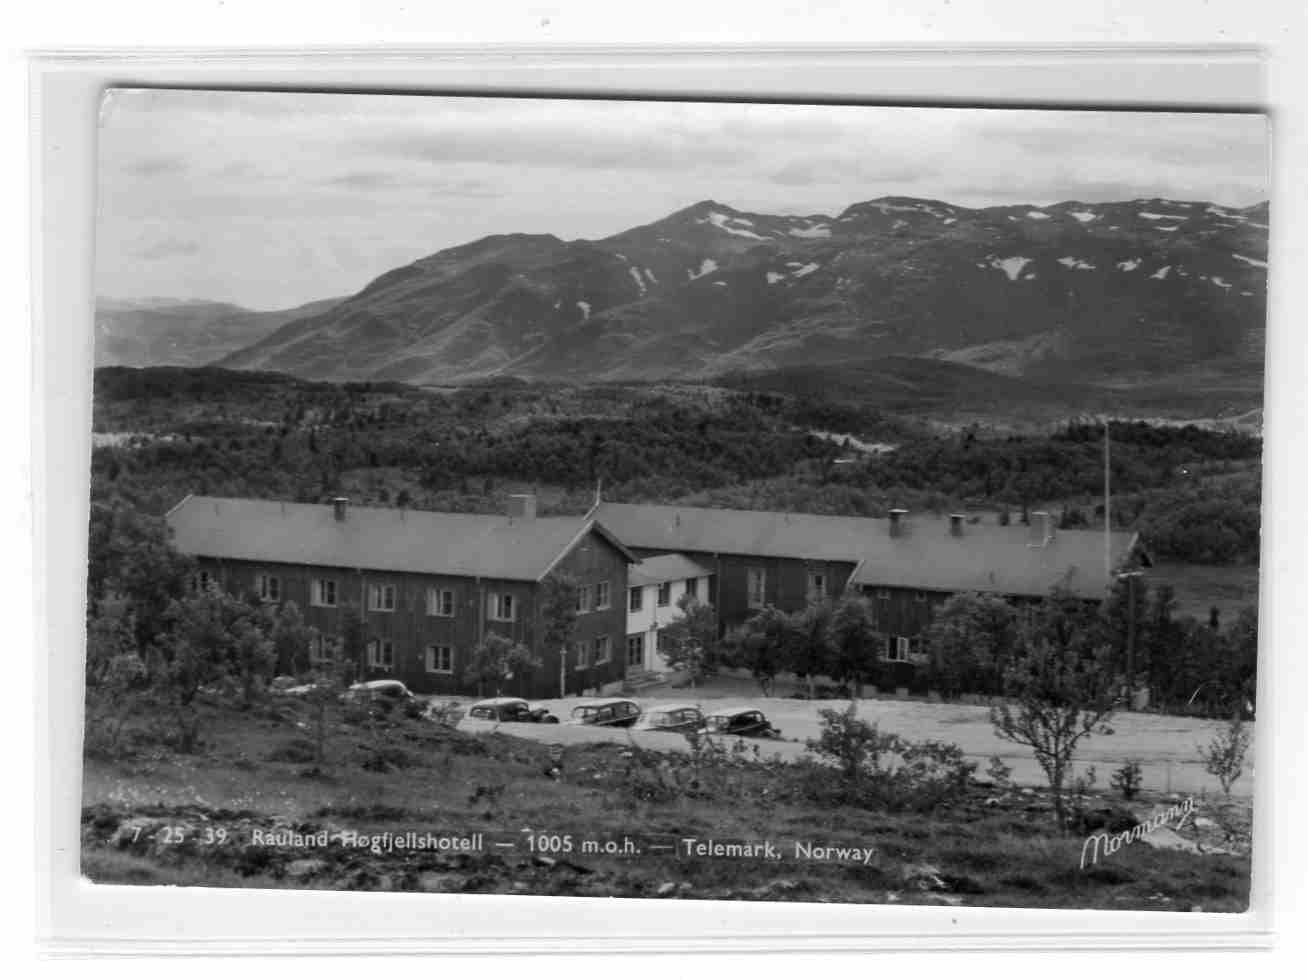 Rauland høgfjellshotell No: 7 25 39